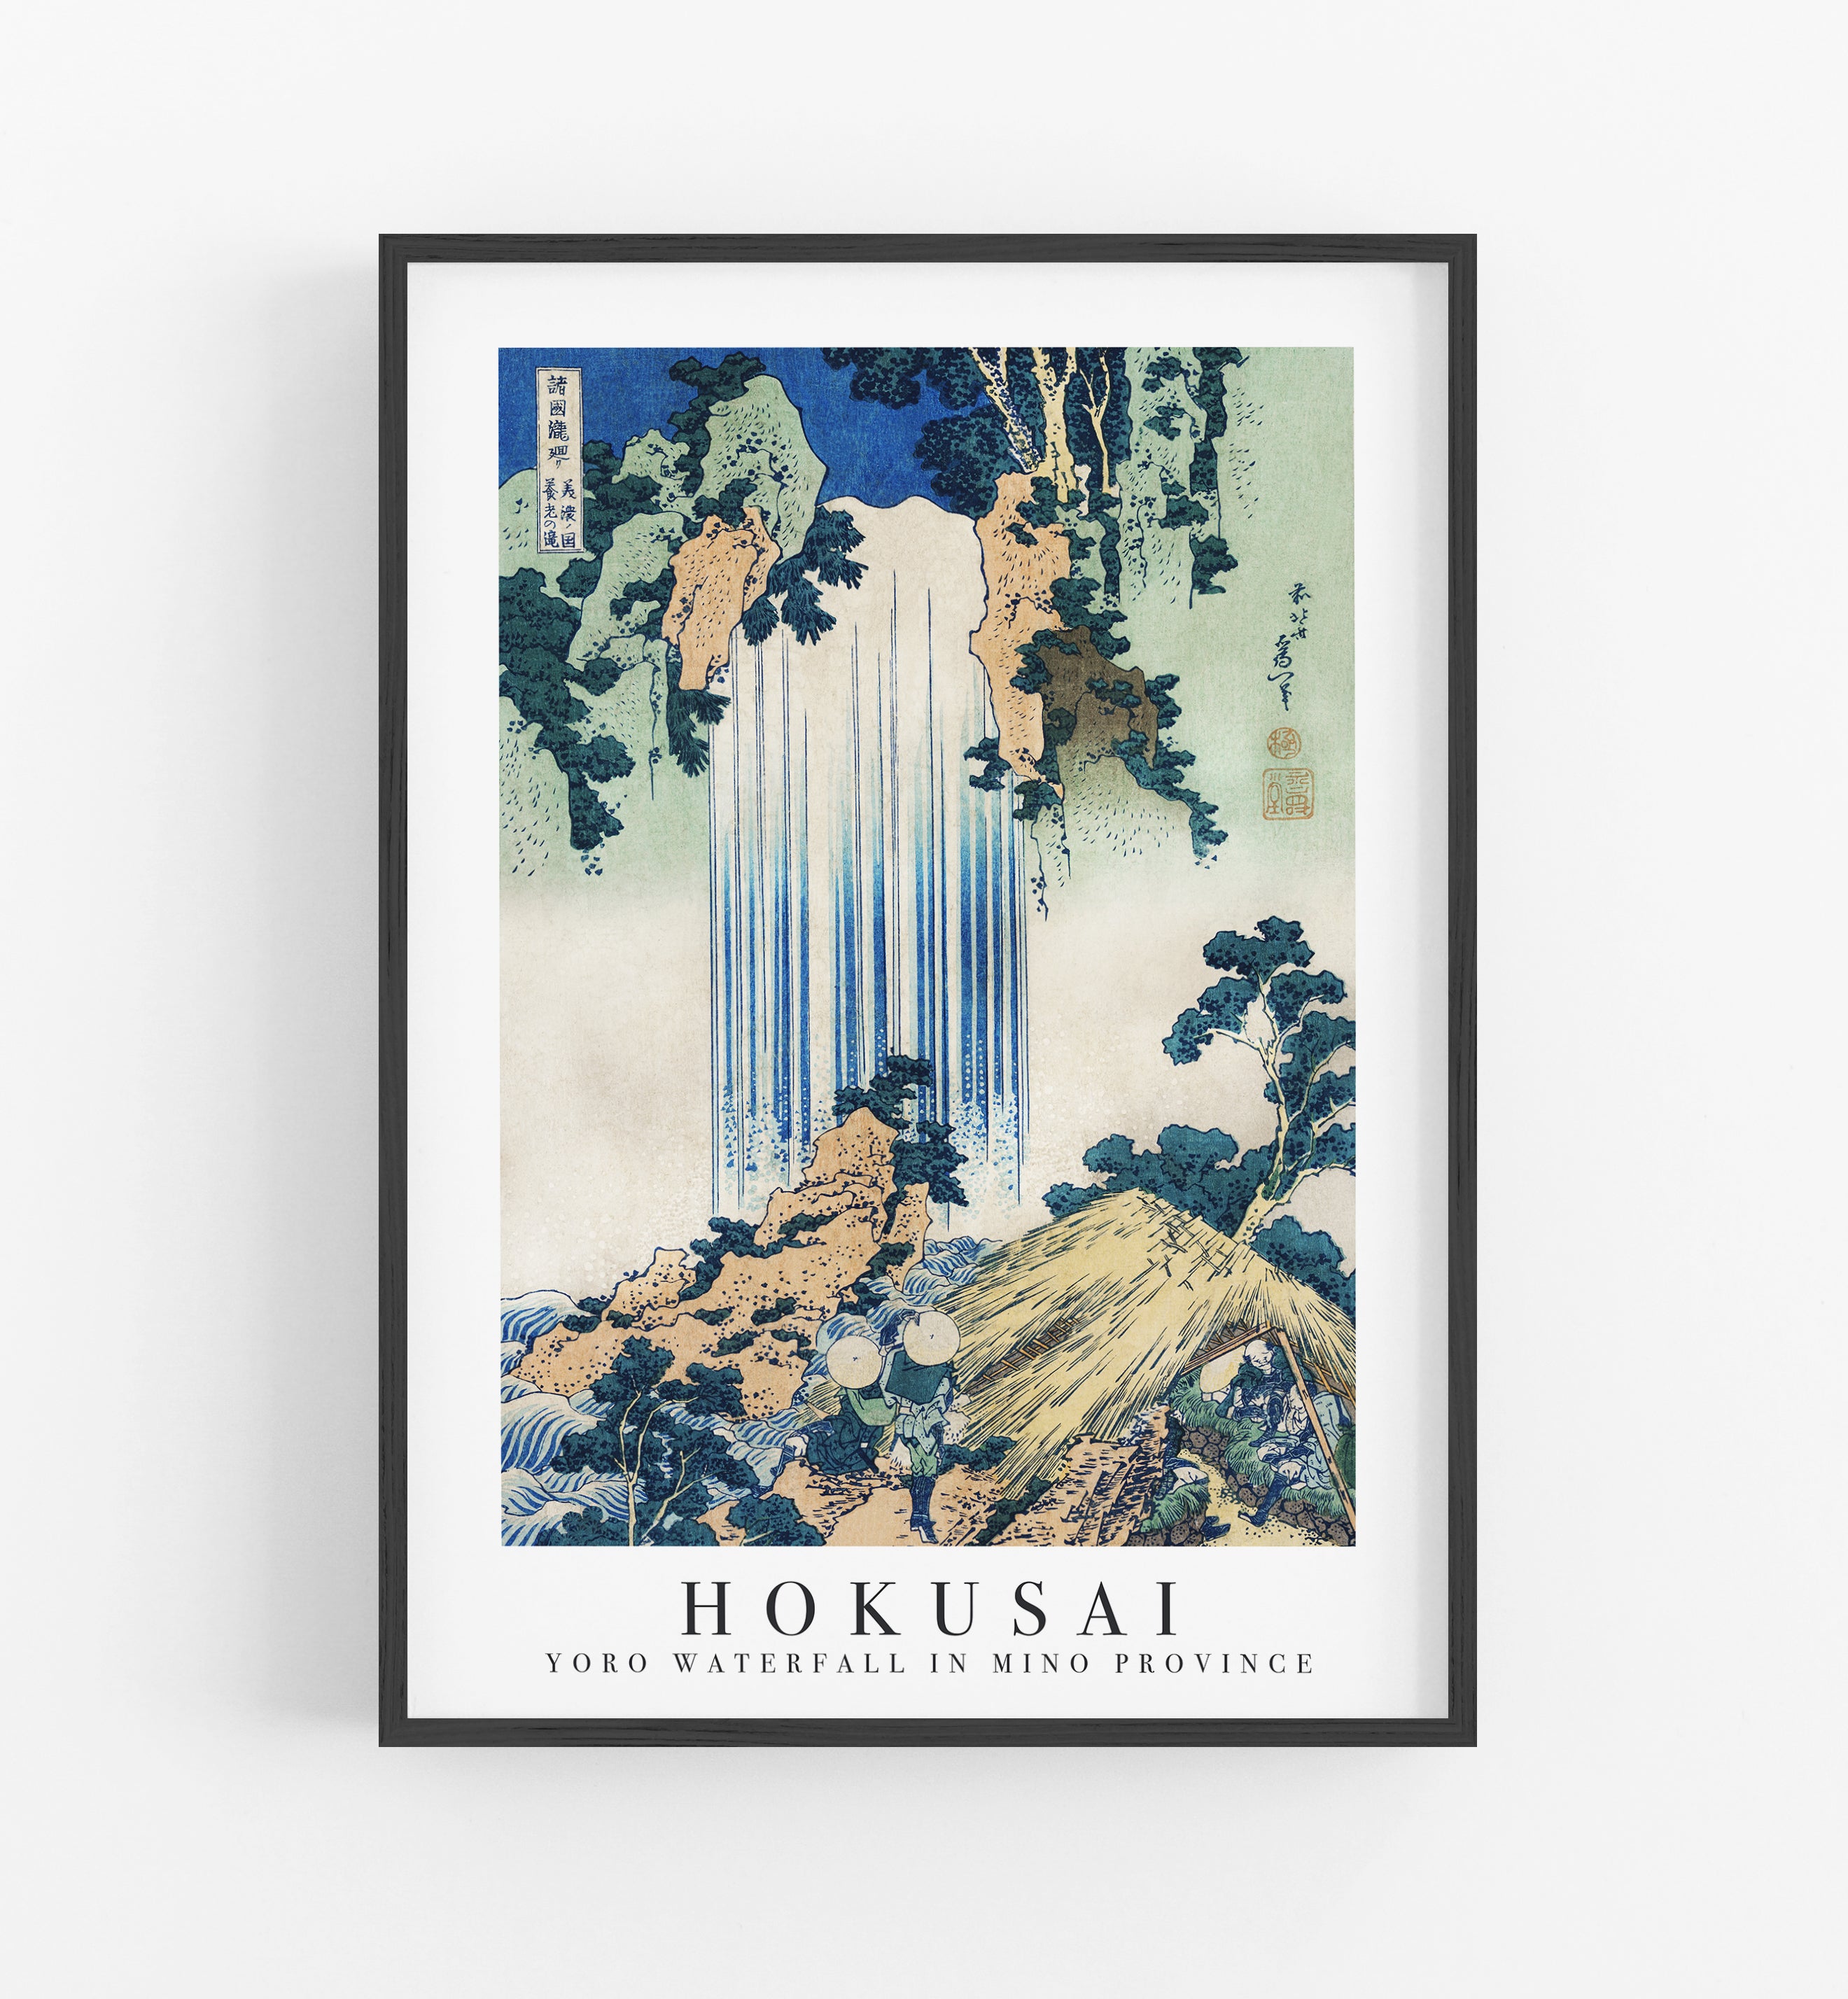 Hokusai Yoro Waterfall